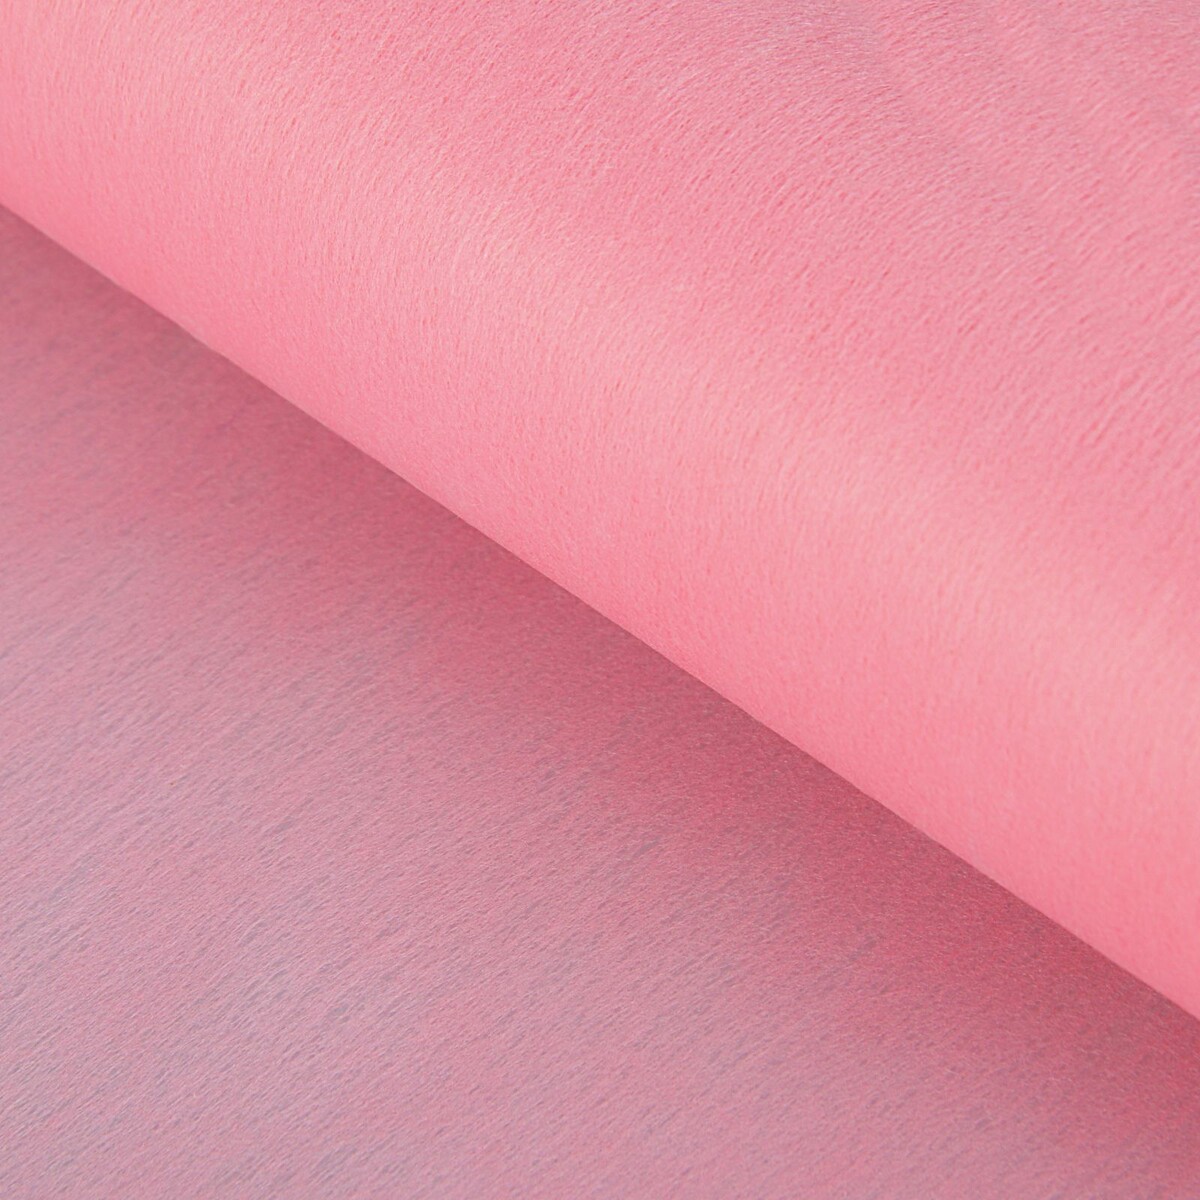 Фетр для упаковок и поделок, однотонный, розовый, двусторонний, рулон 1шт., 0,5 x 20 м фетр для декора и флористики однотонный бургундский красный рулон 1шт 50 см x 15 м